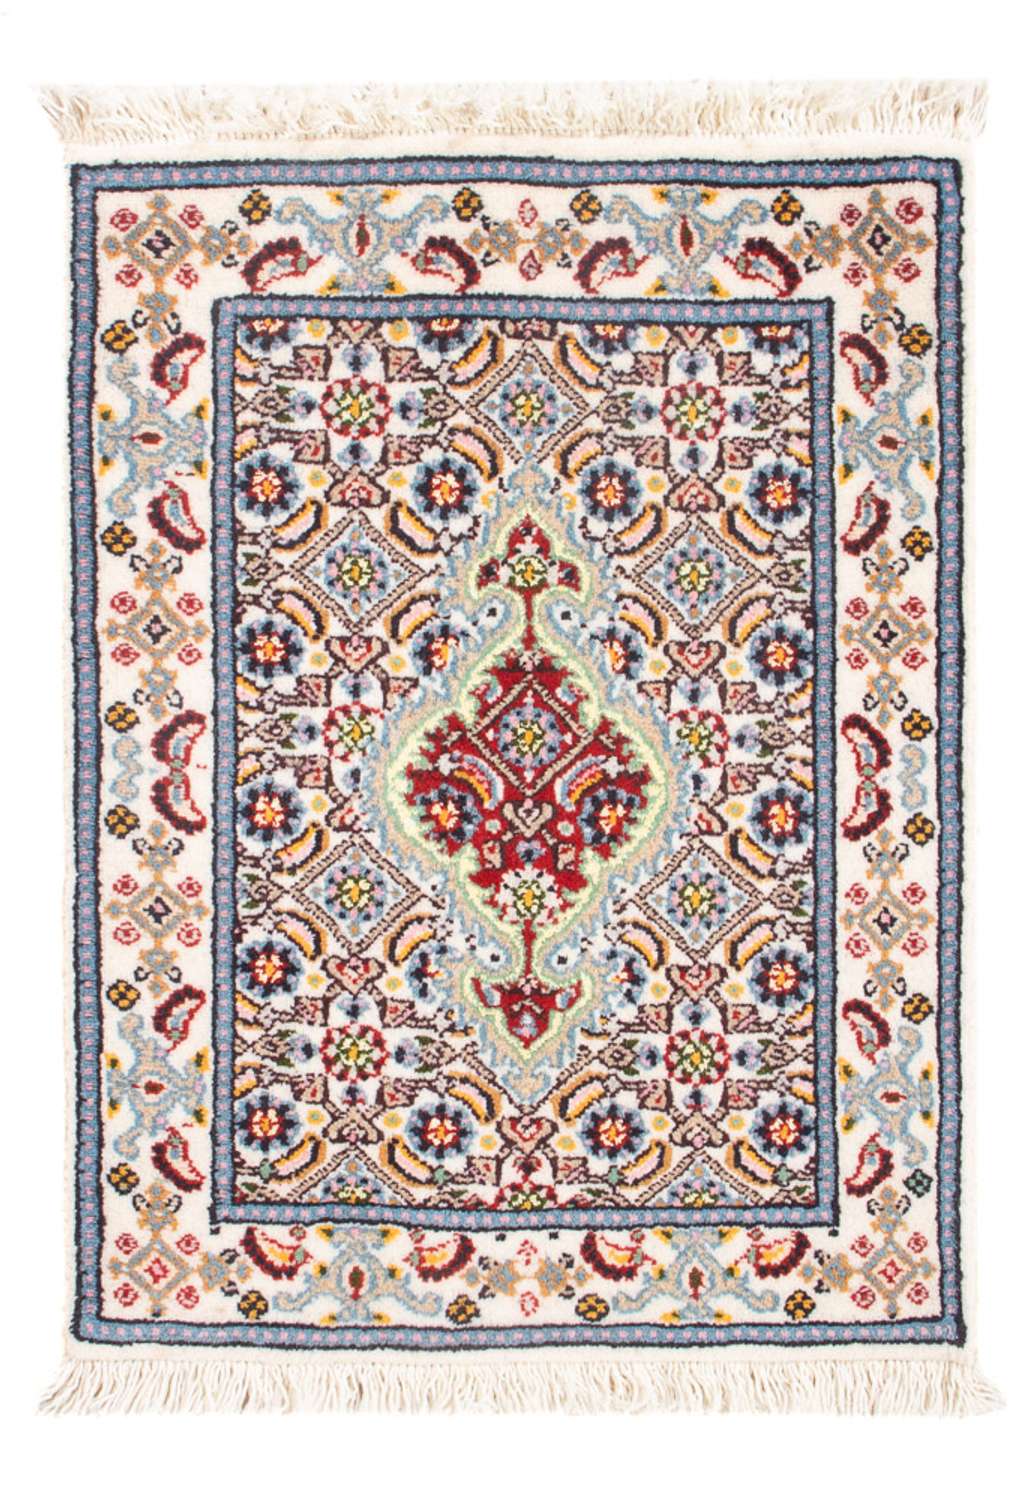 Alfombra persa - Clásica - Real - 60 x 40 cm - multicolor